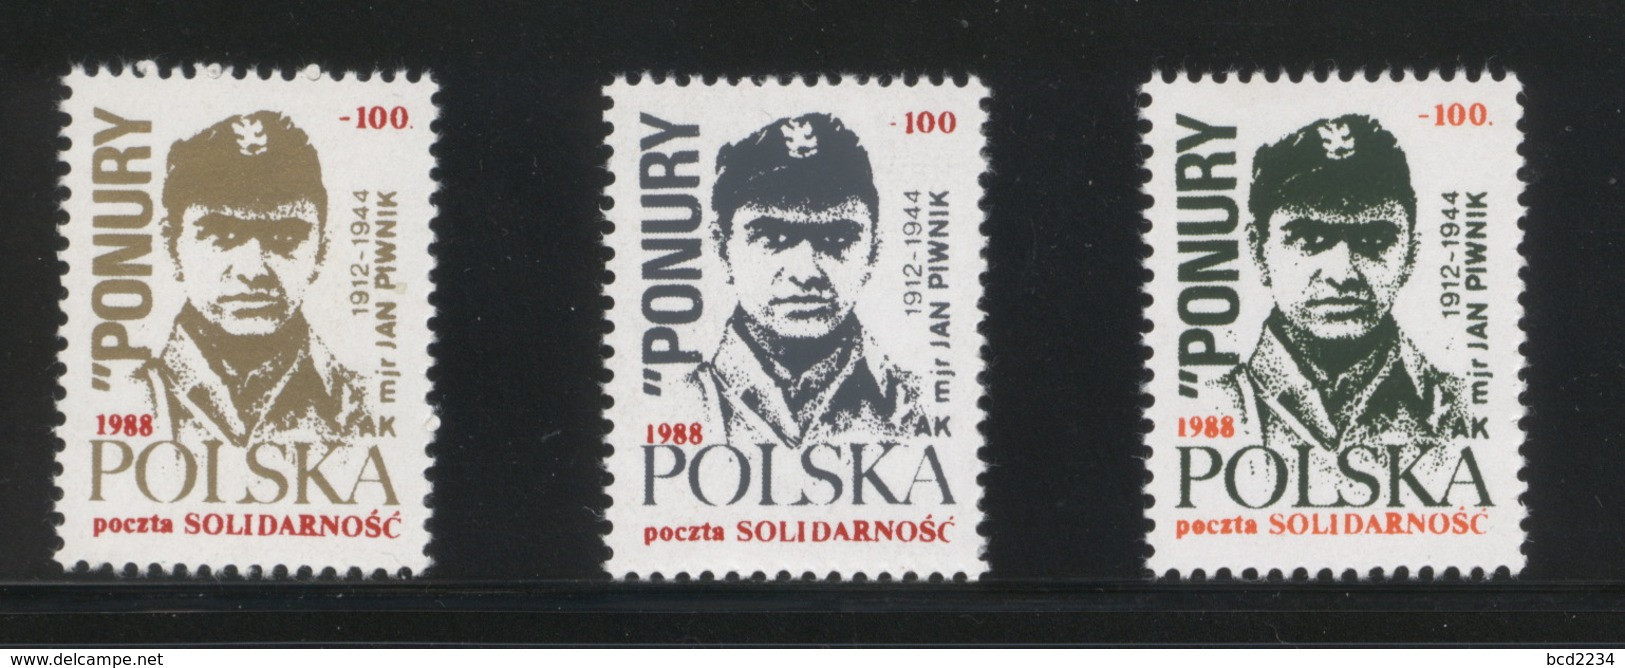 POLAND SOLIDARNOSC JAN PIWNIK WW2 POLICE & SOLDIER AGAINST NAZI GERMANY & RUSSIA SET OF 3 GOVT EXILE FRANCE POLISH ARMY - Solidarnosc-Vignetten